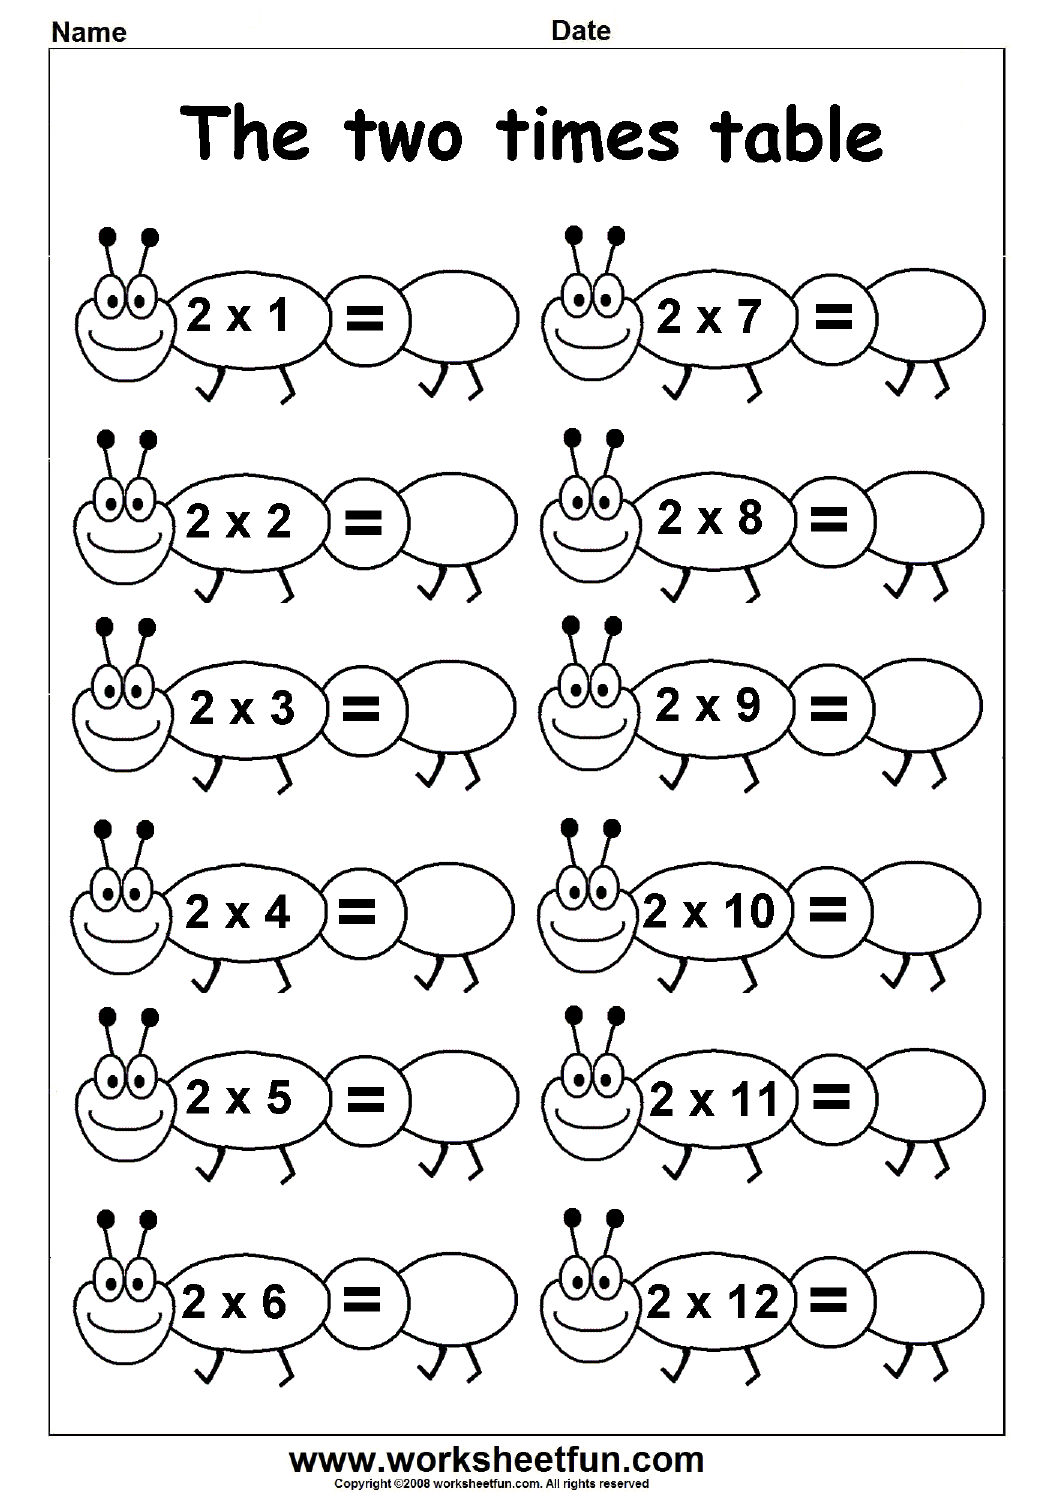 Multiplication Times Tables Worksheets – 20, 20, 20, 20, 20 & 20 Times Regarding 2 Times Table Worksheet